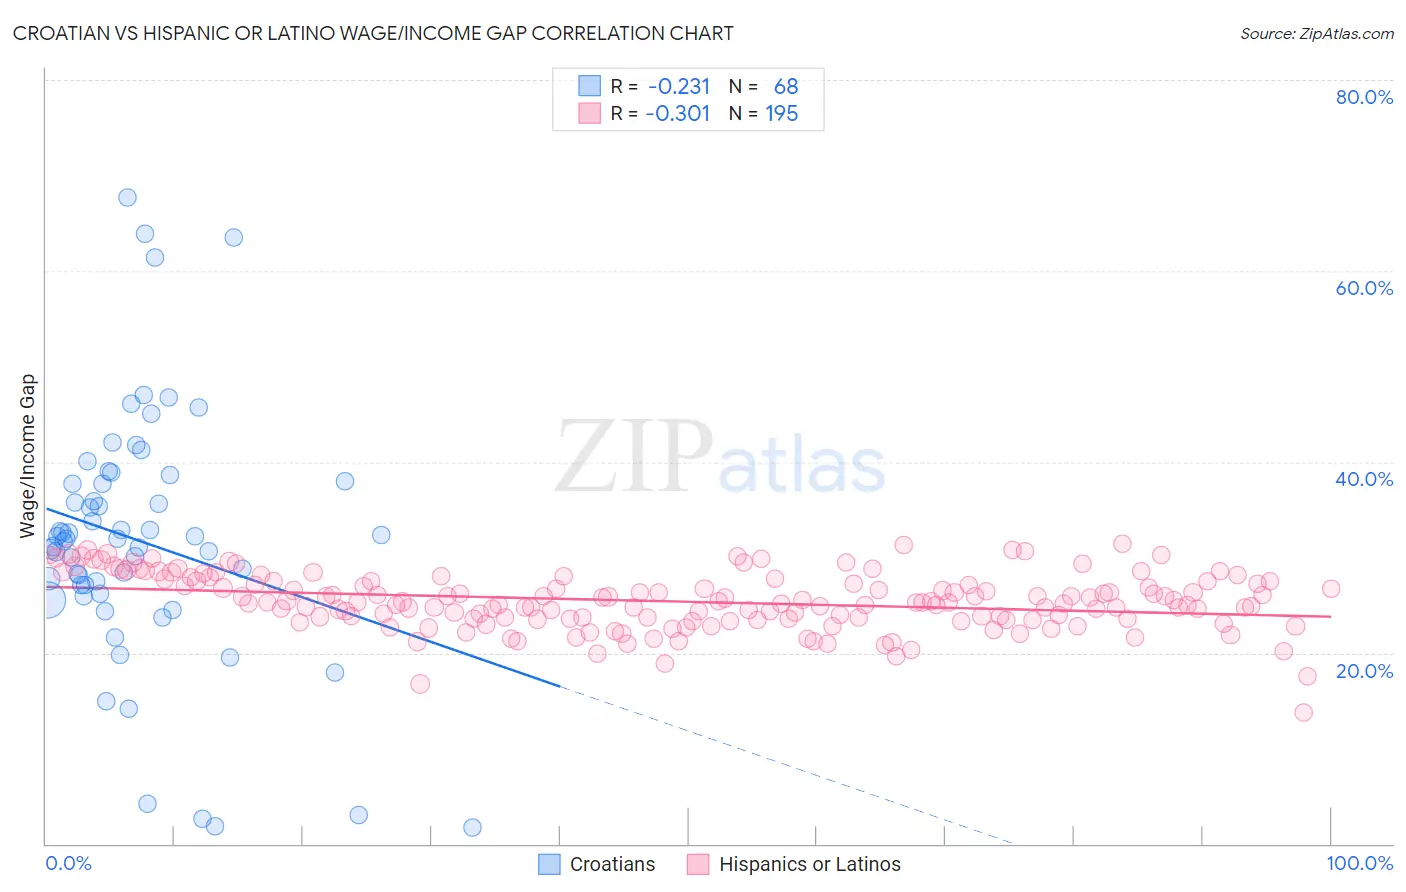 Croatian vs Hispanic or Latino Wage/Income Gap